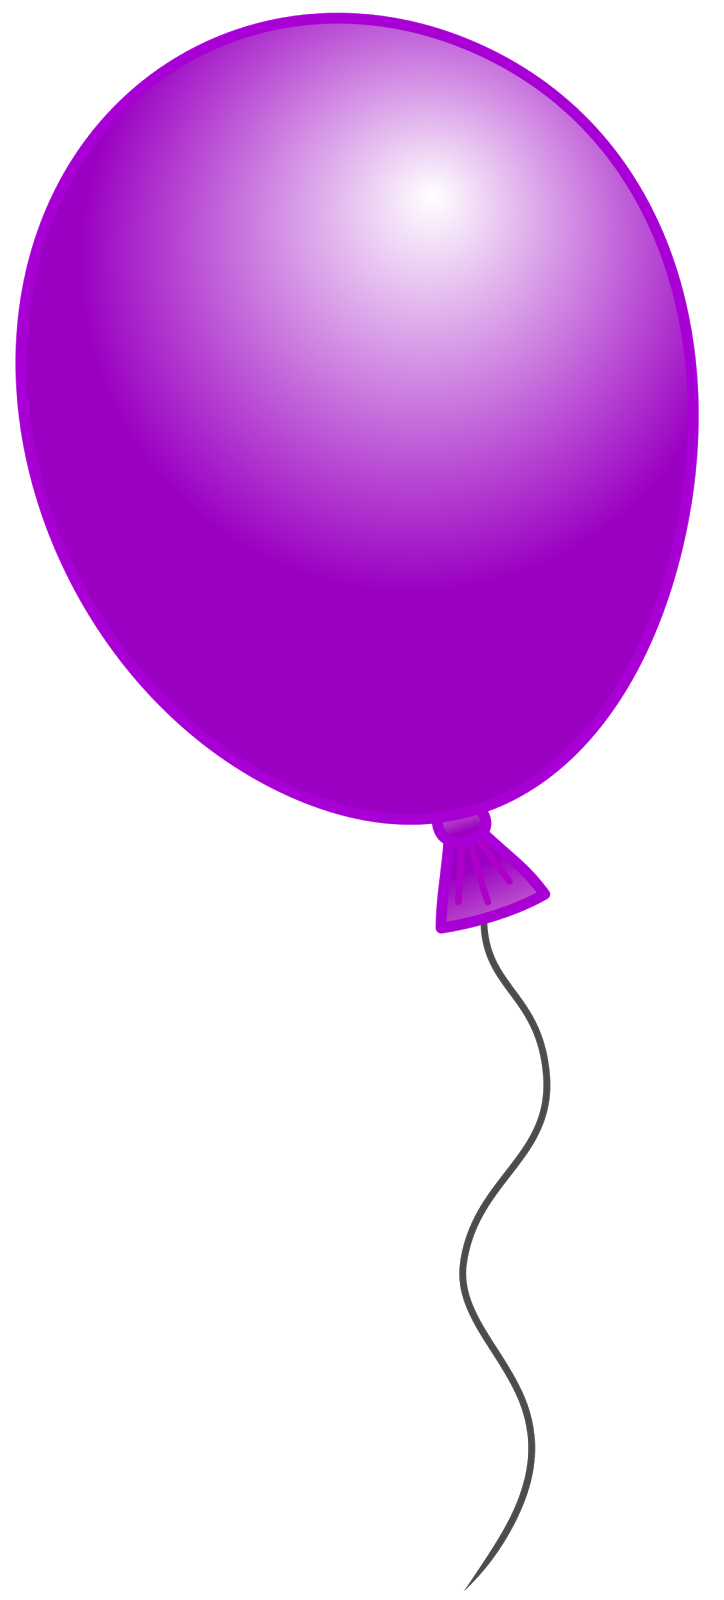 Single balloon clipart no back ground